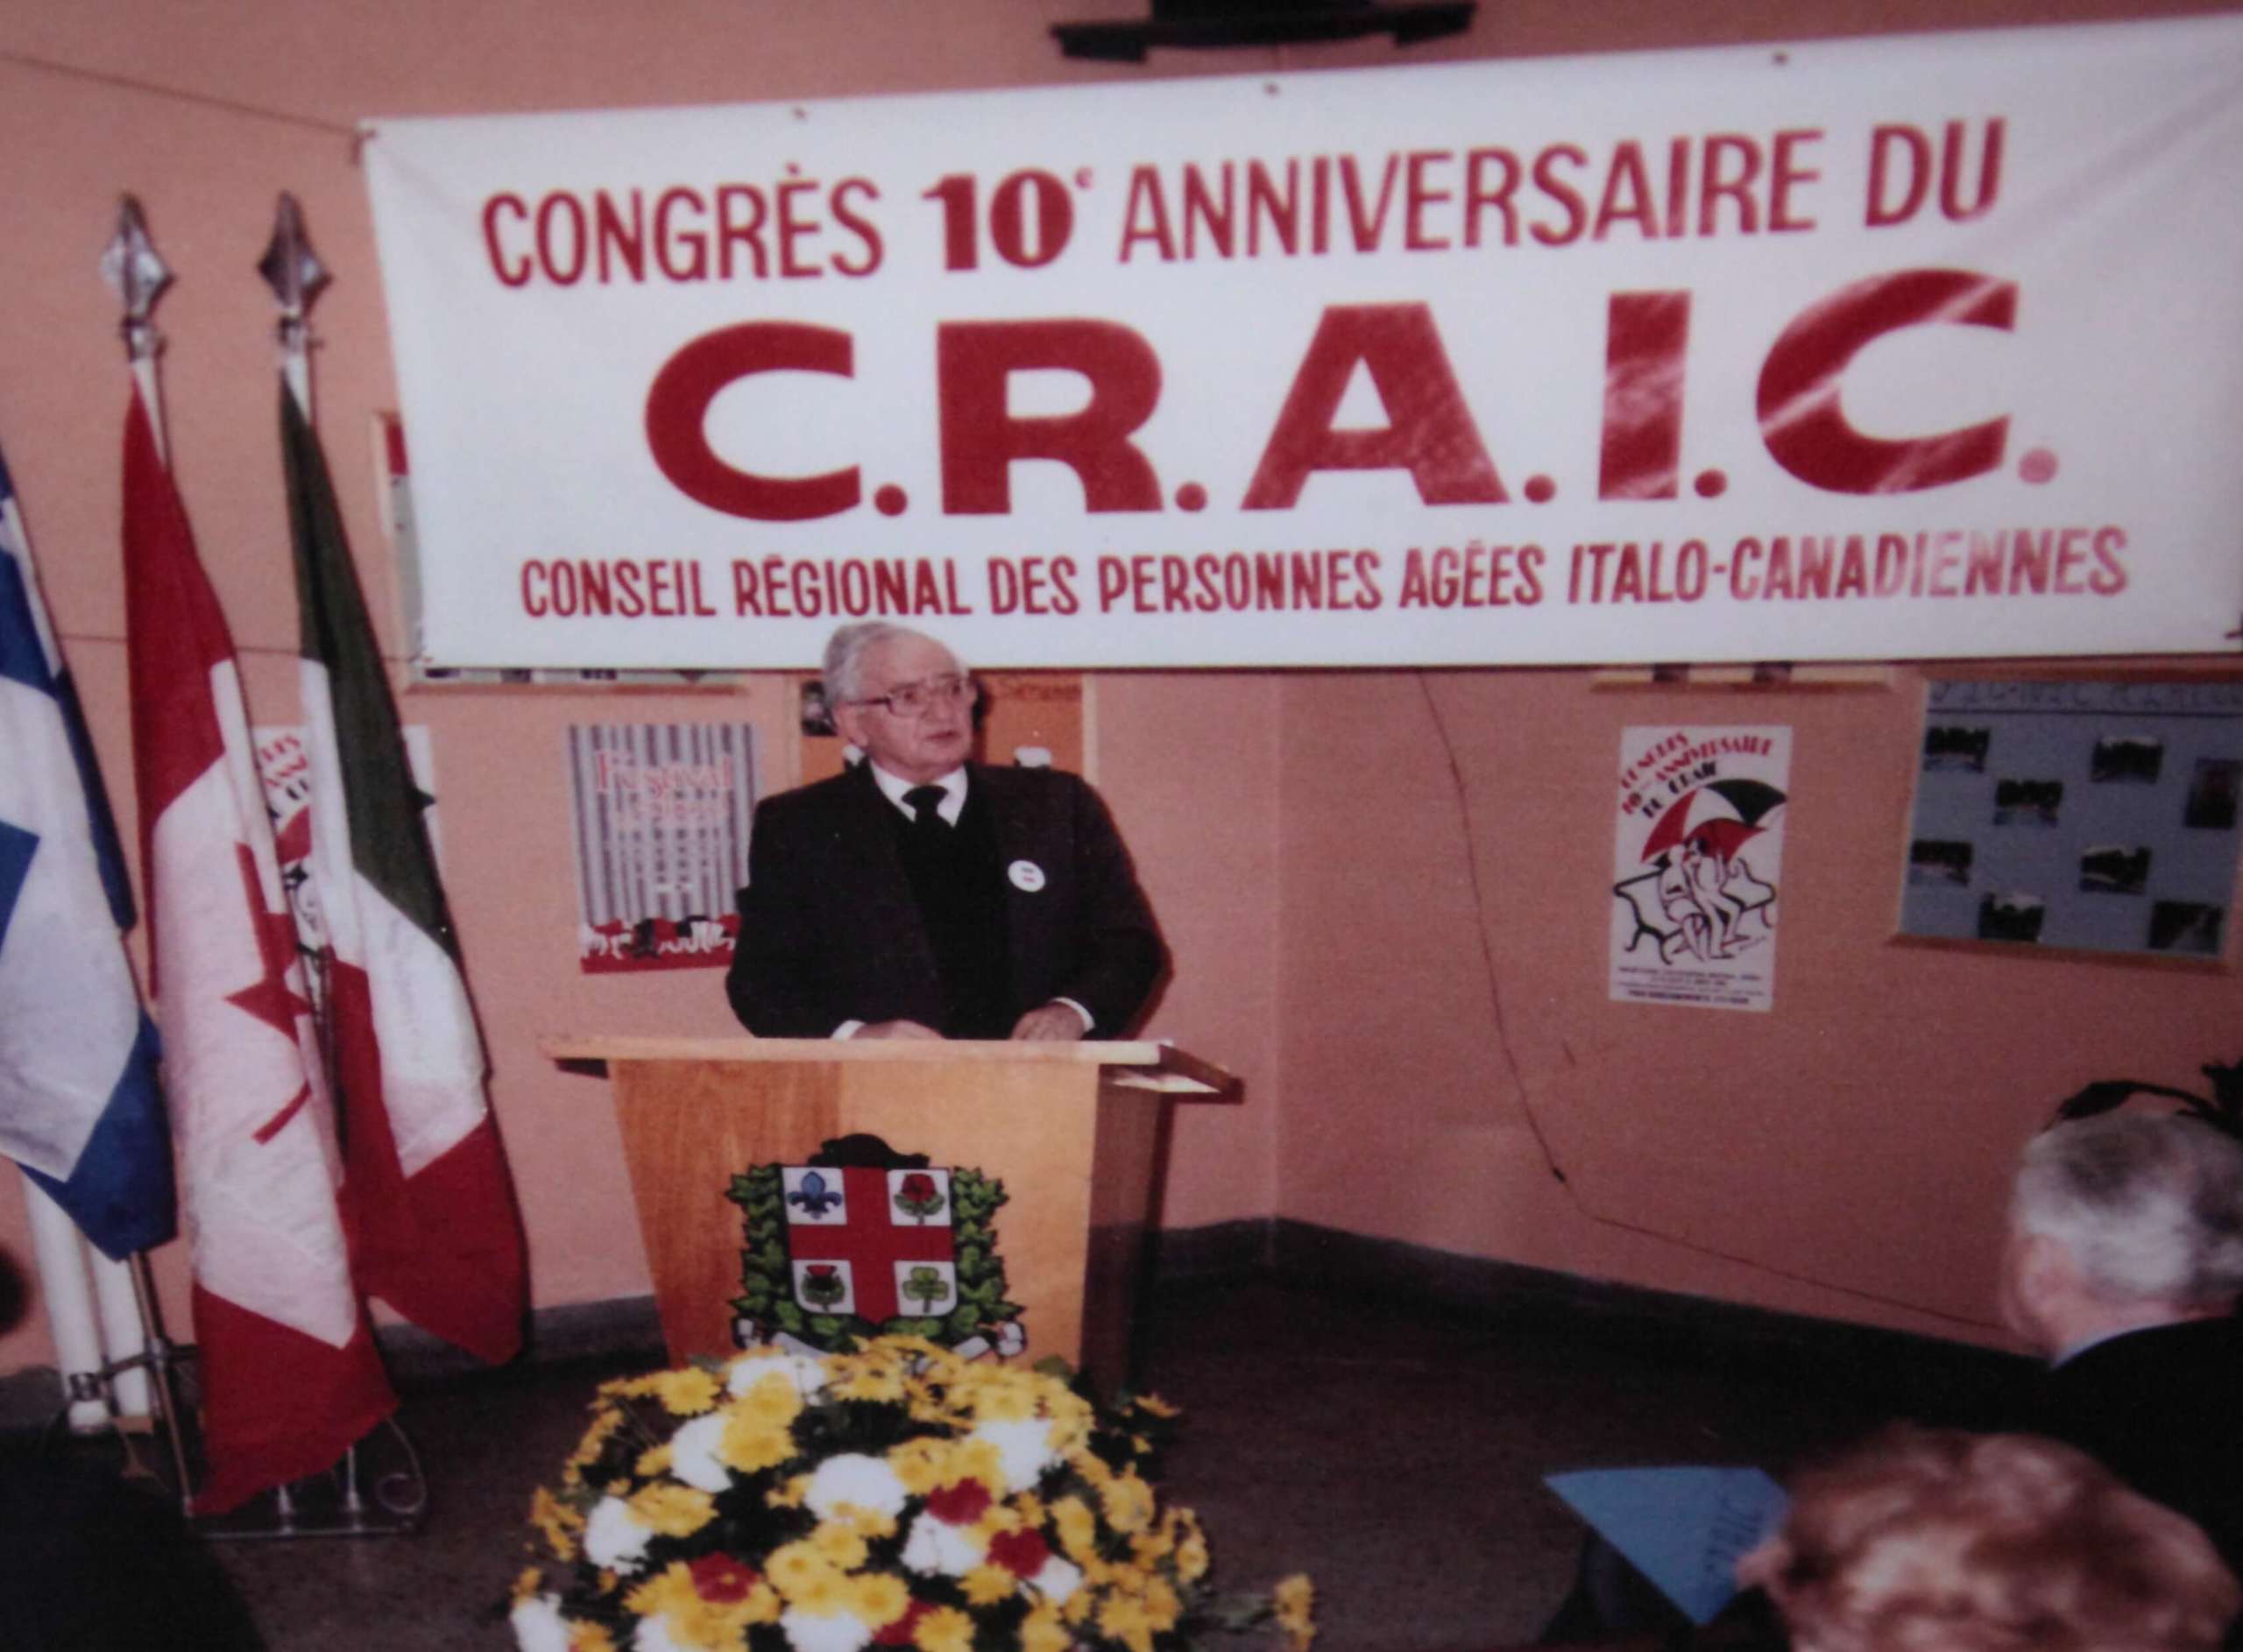 congres-10e-anniversaire-CRAIC